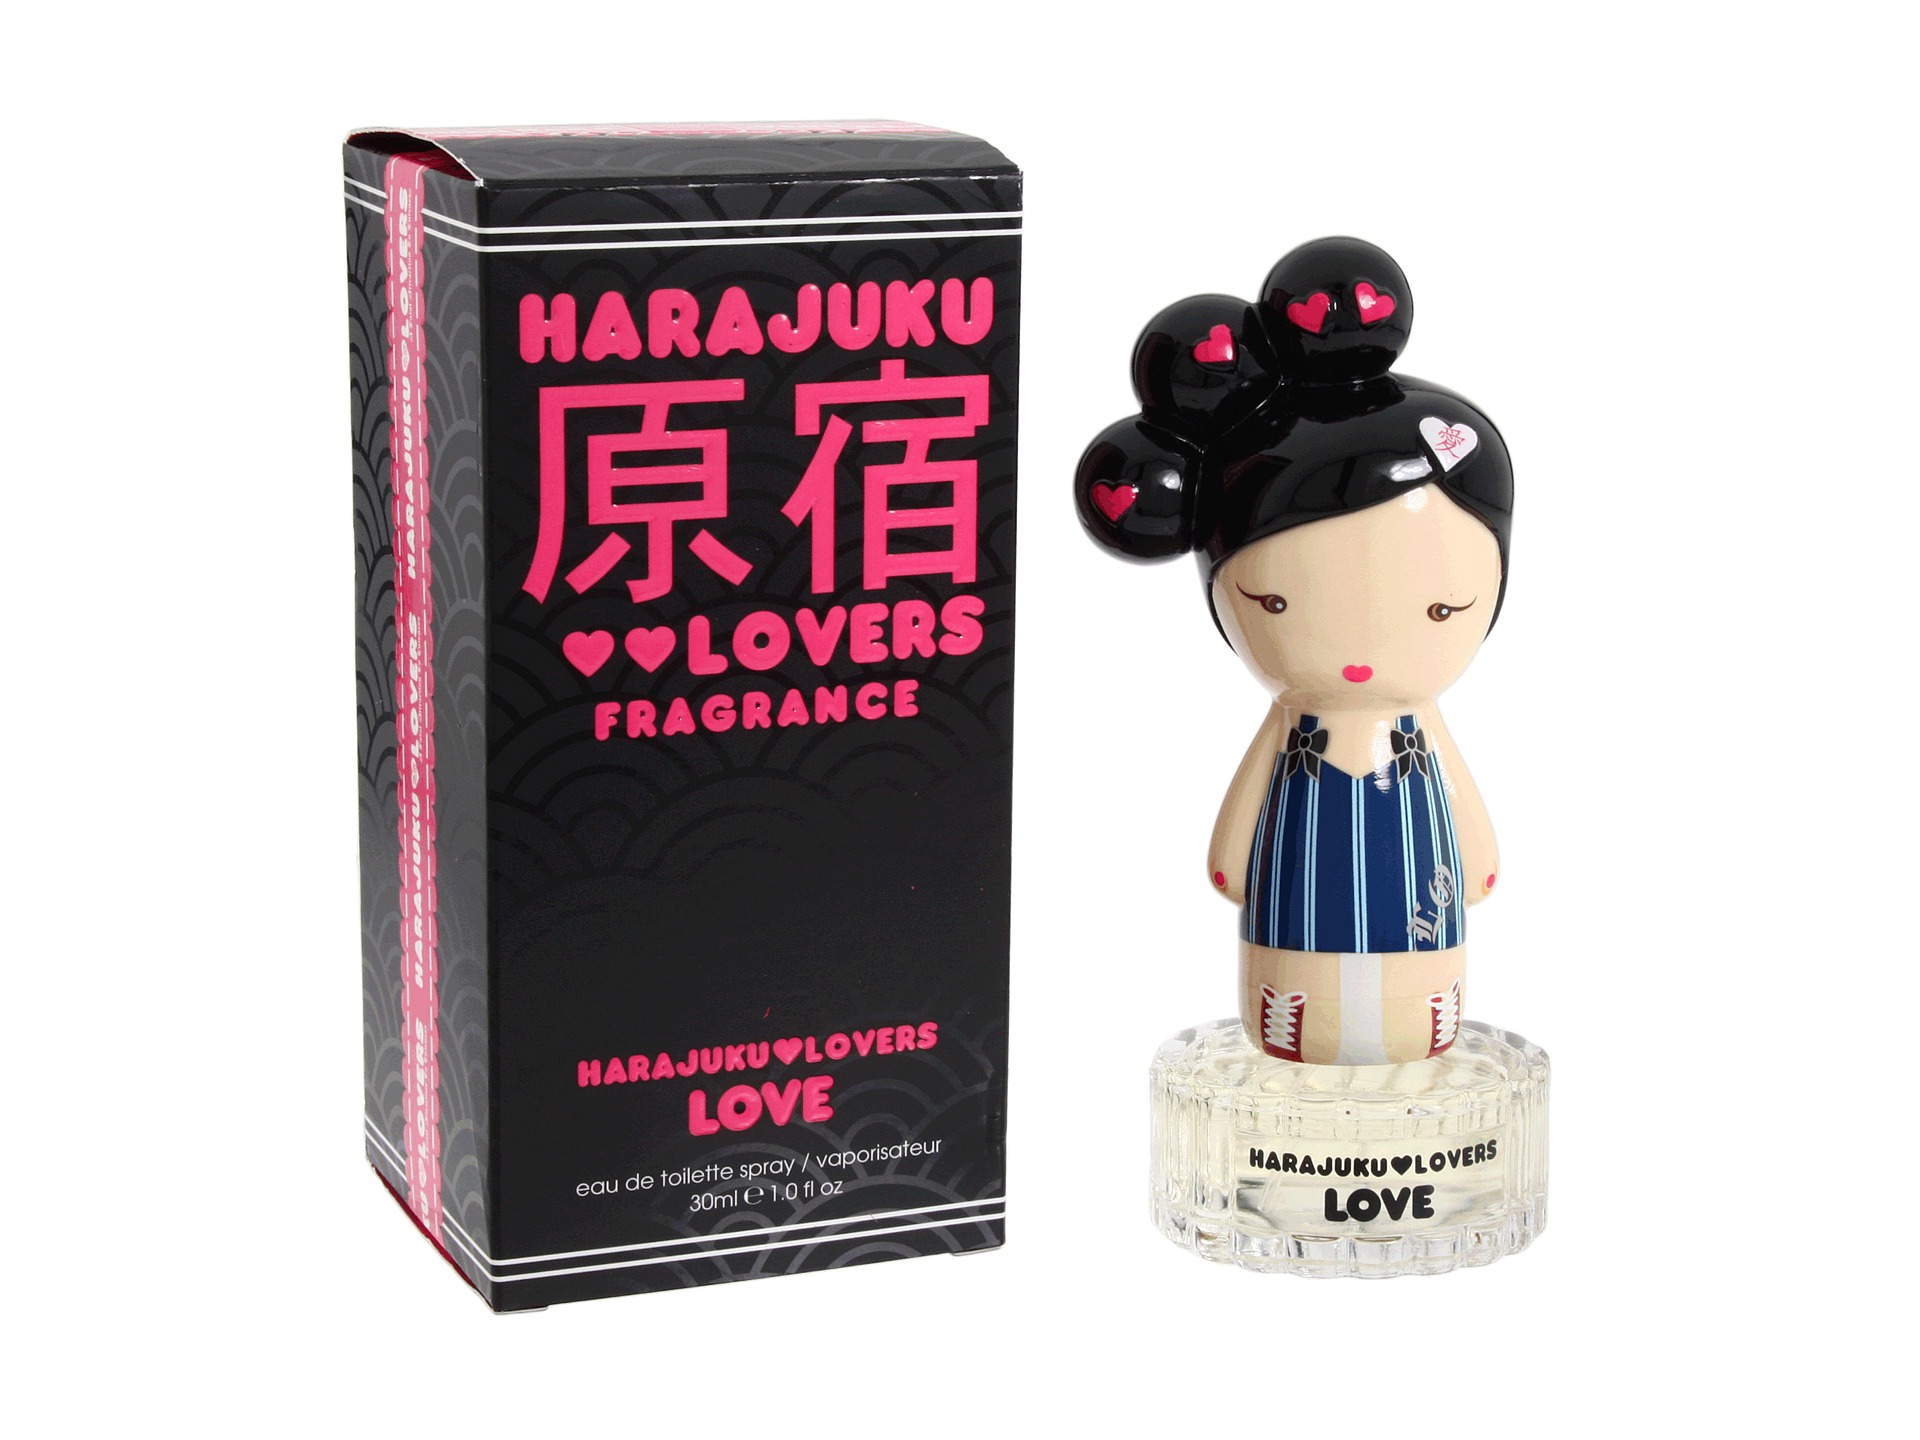 Harajuku Lovers Harajuku Lovers Love Eau de Toilette 1.0 oz Spray $35 